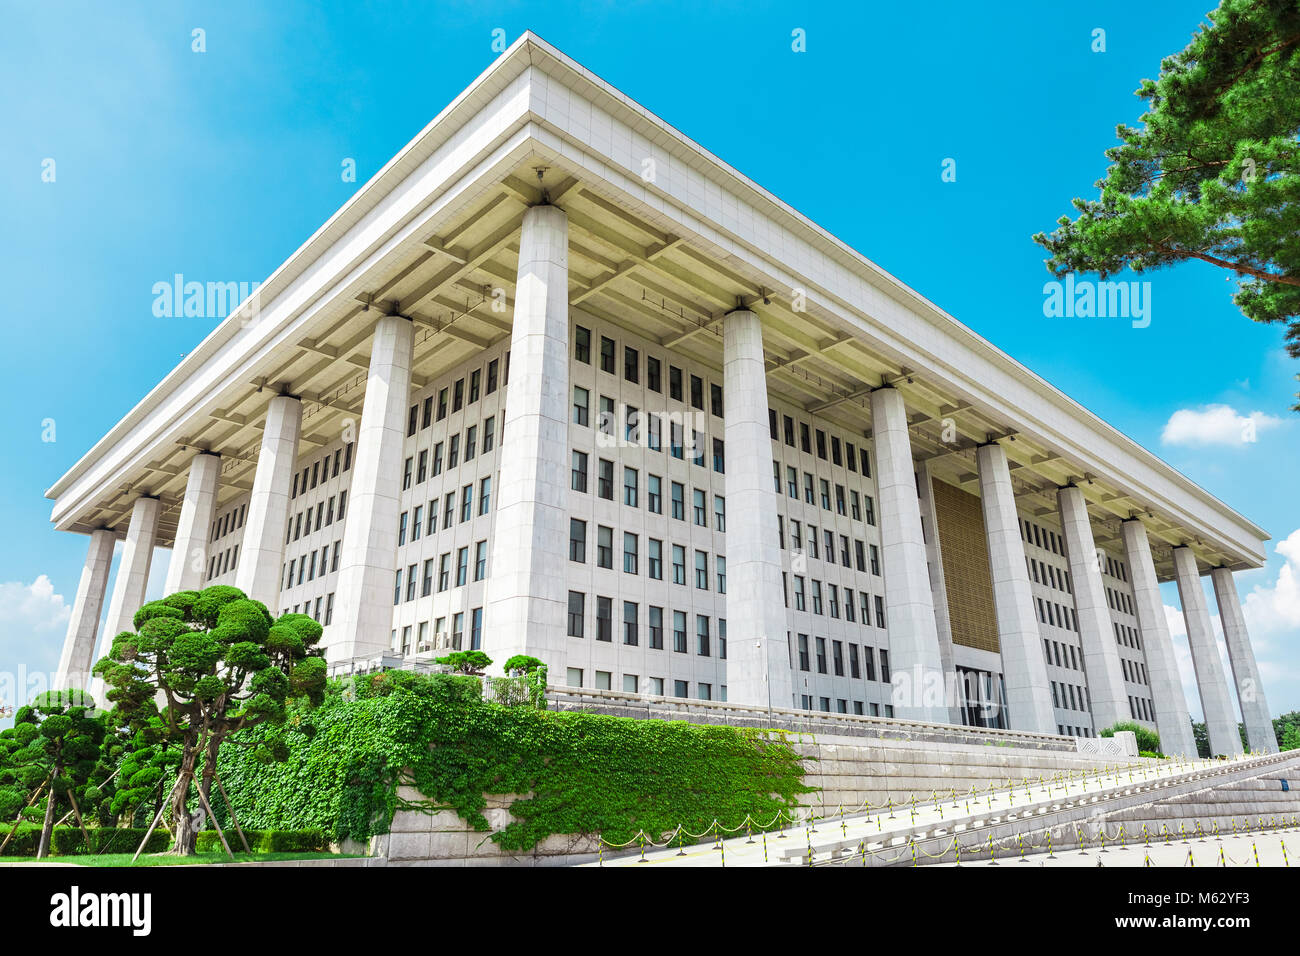 SEOUL, KOREA - AUGUST 14, 2015: Building of National Assembly Proceeding Hall - South Korean Capitol on Yeouido island - Seoul, Korea Stock Photo